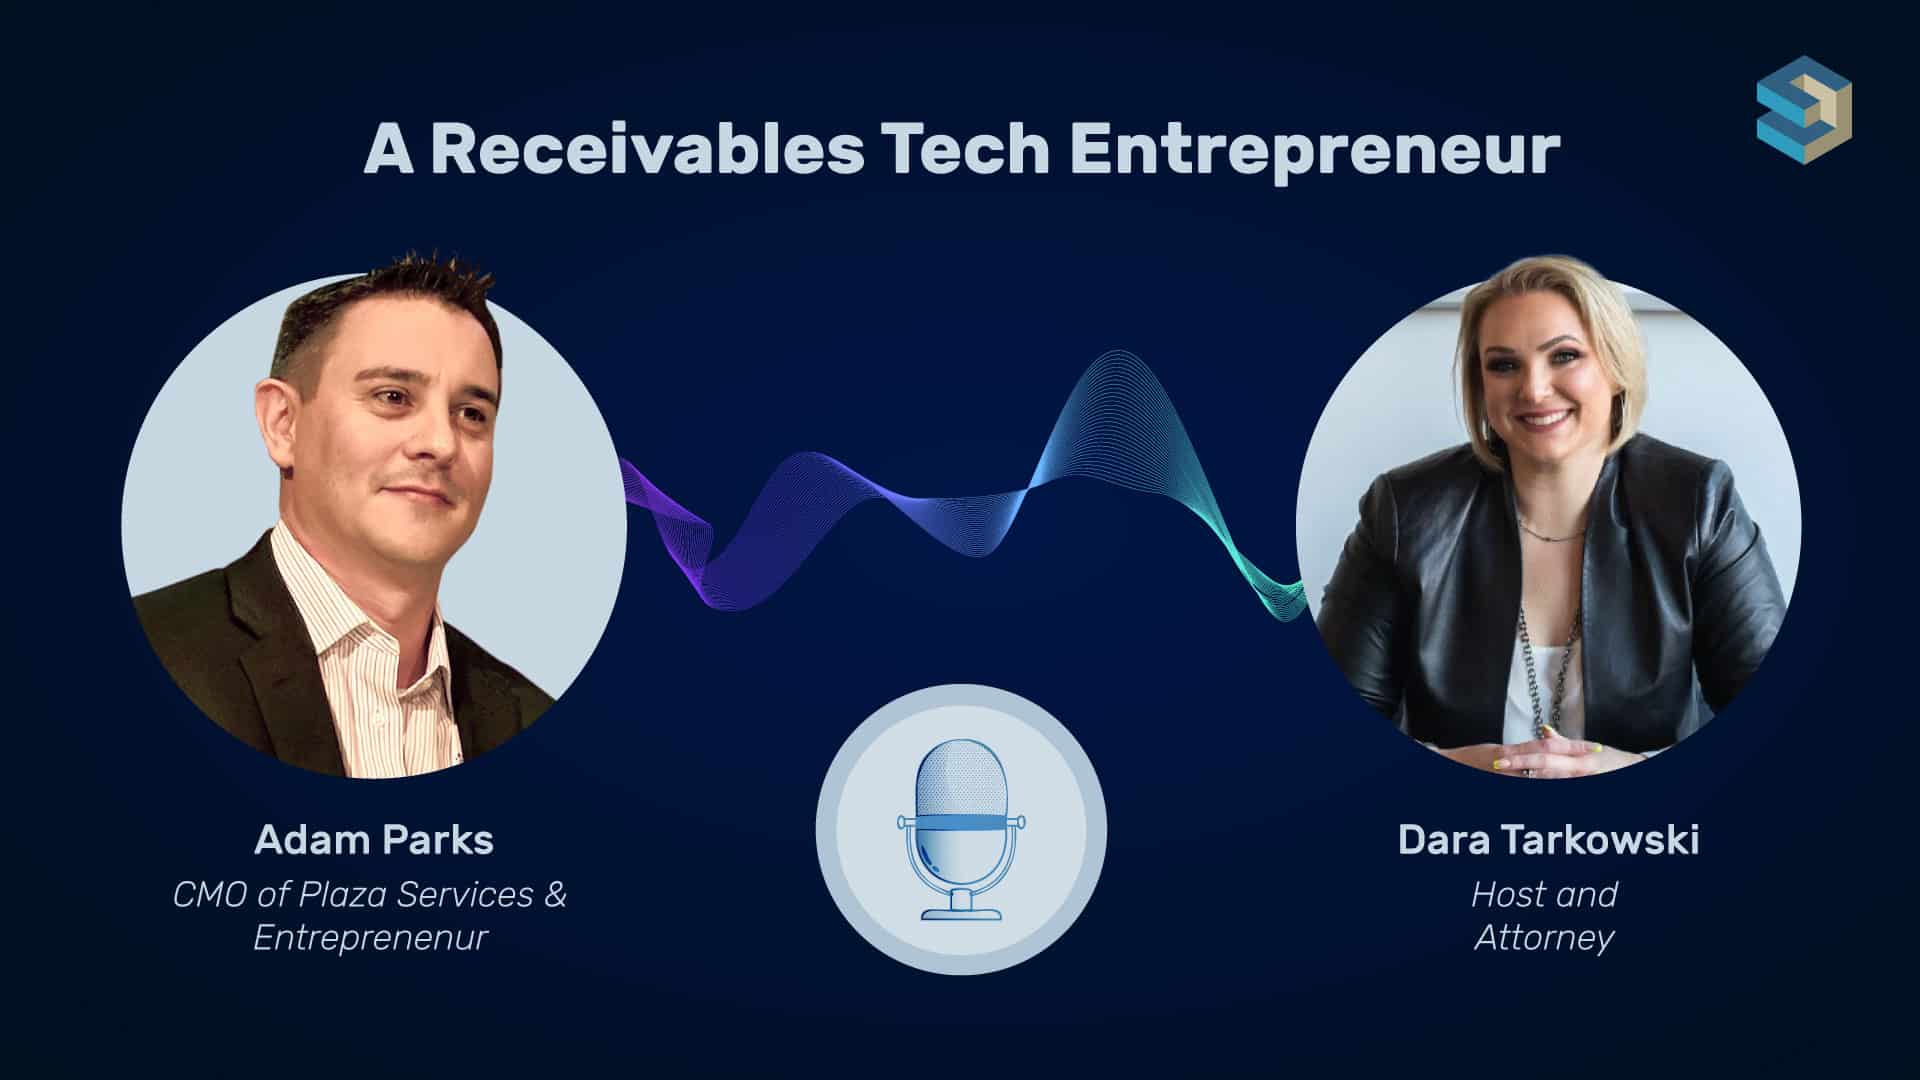 Adam Parks from Plaza Services speaks with Dara Tarkowski from Tech Reg